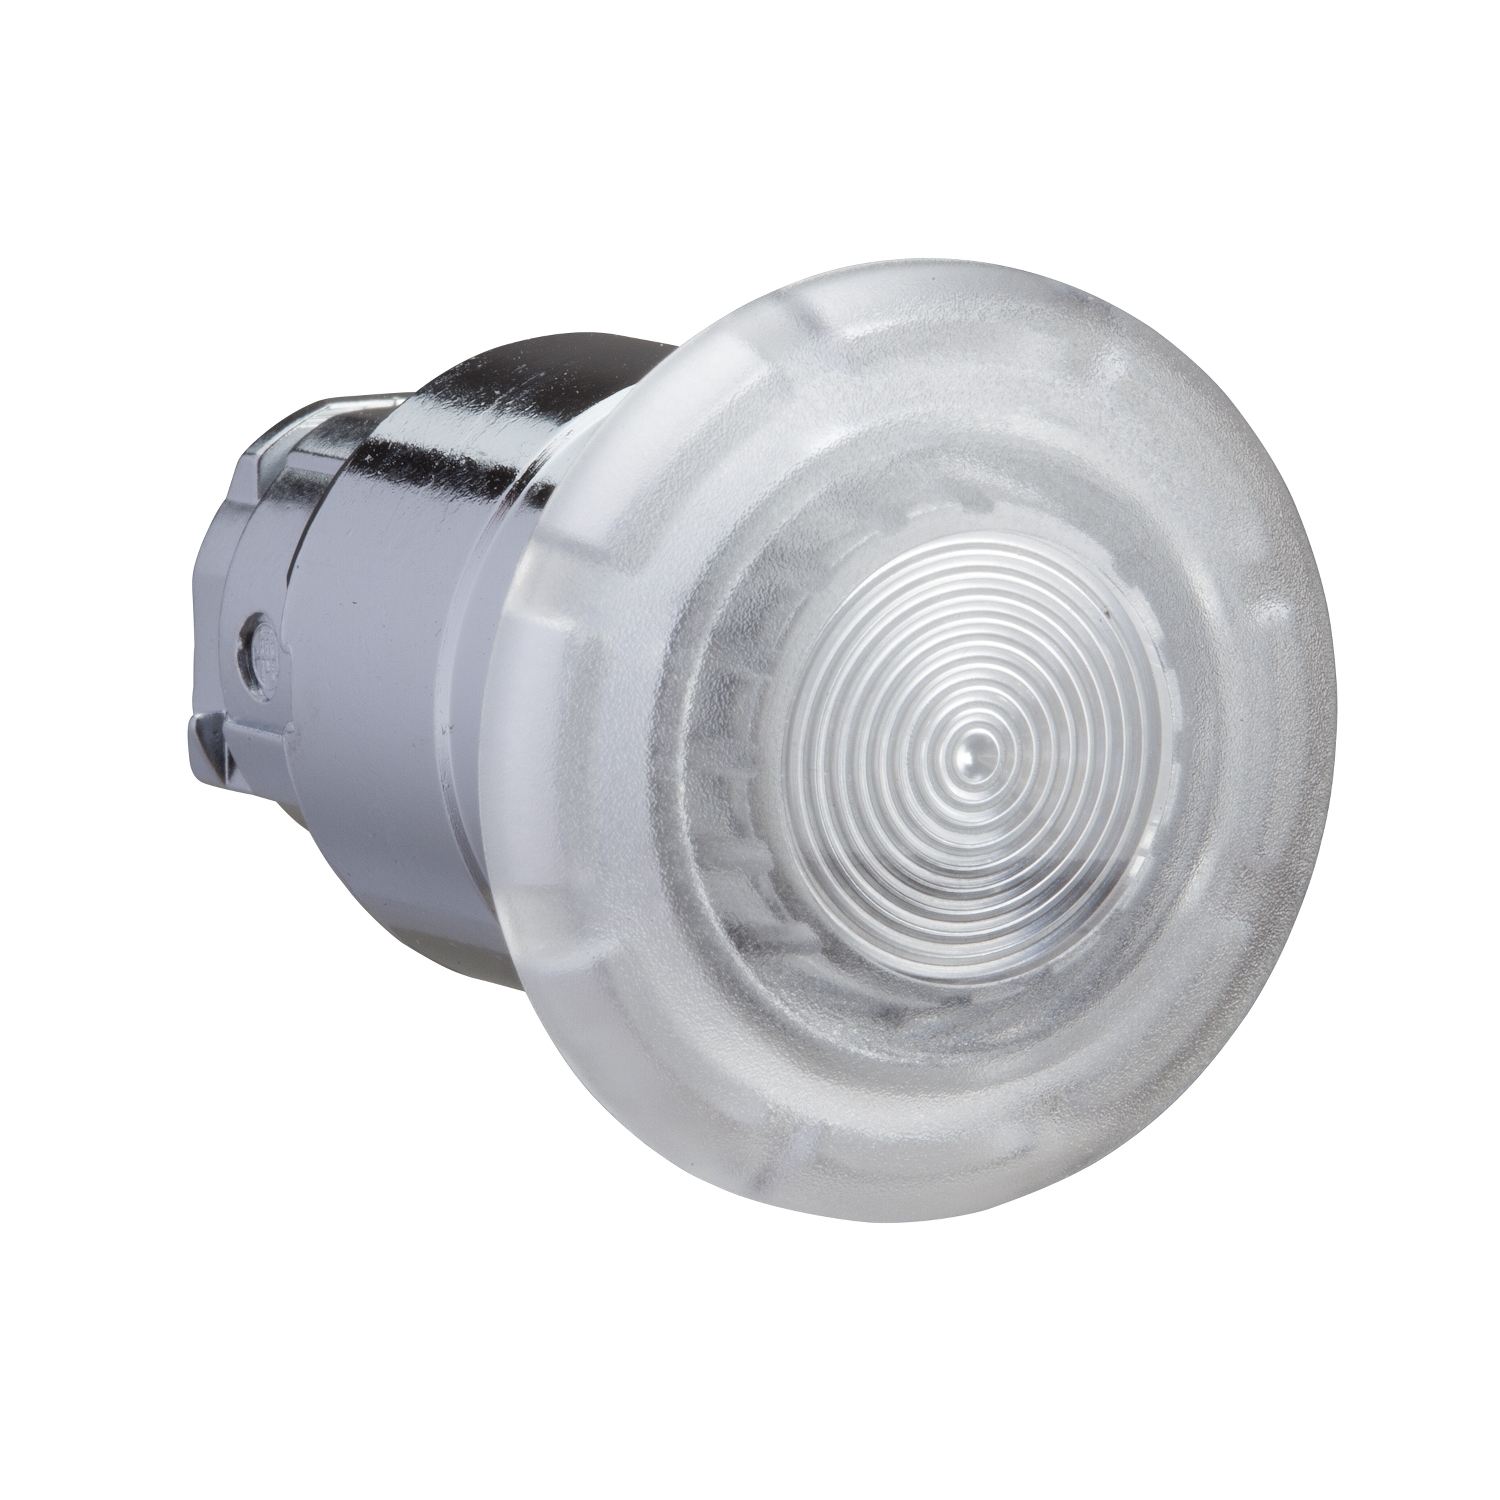 Head for illuminated push button, Harmony XB4, metal, white mushroom 40mm, 22mm, universal LED, spring return